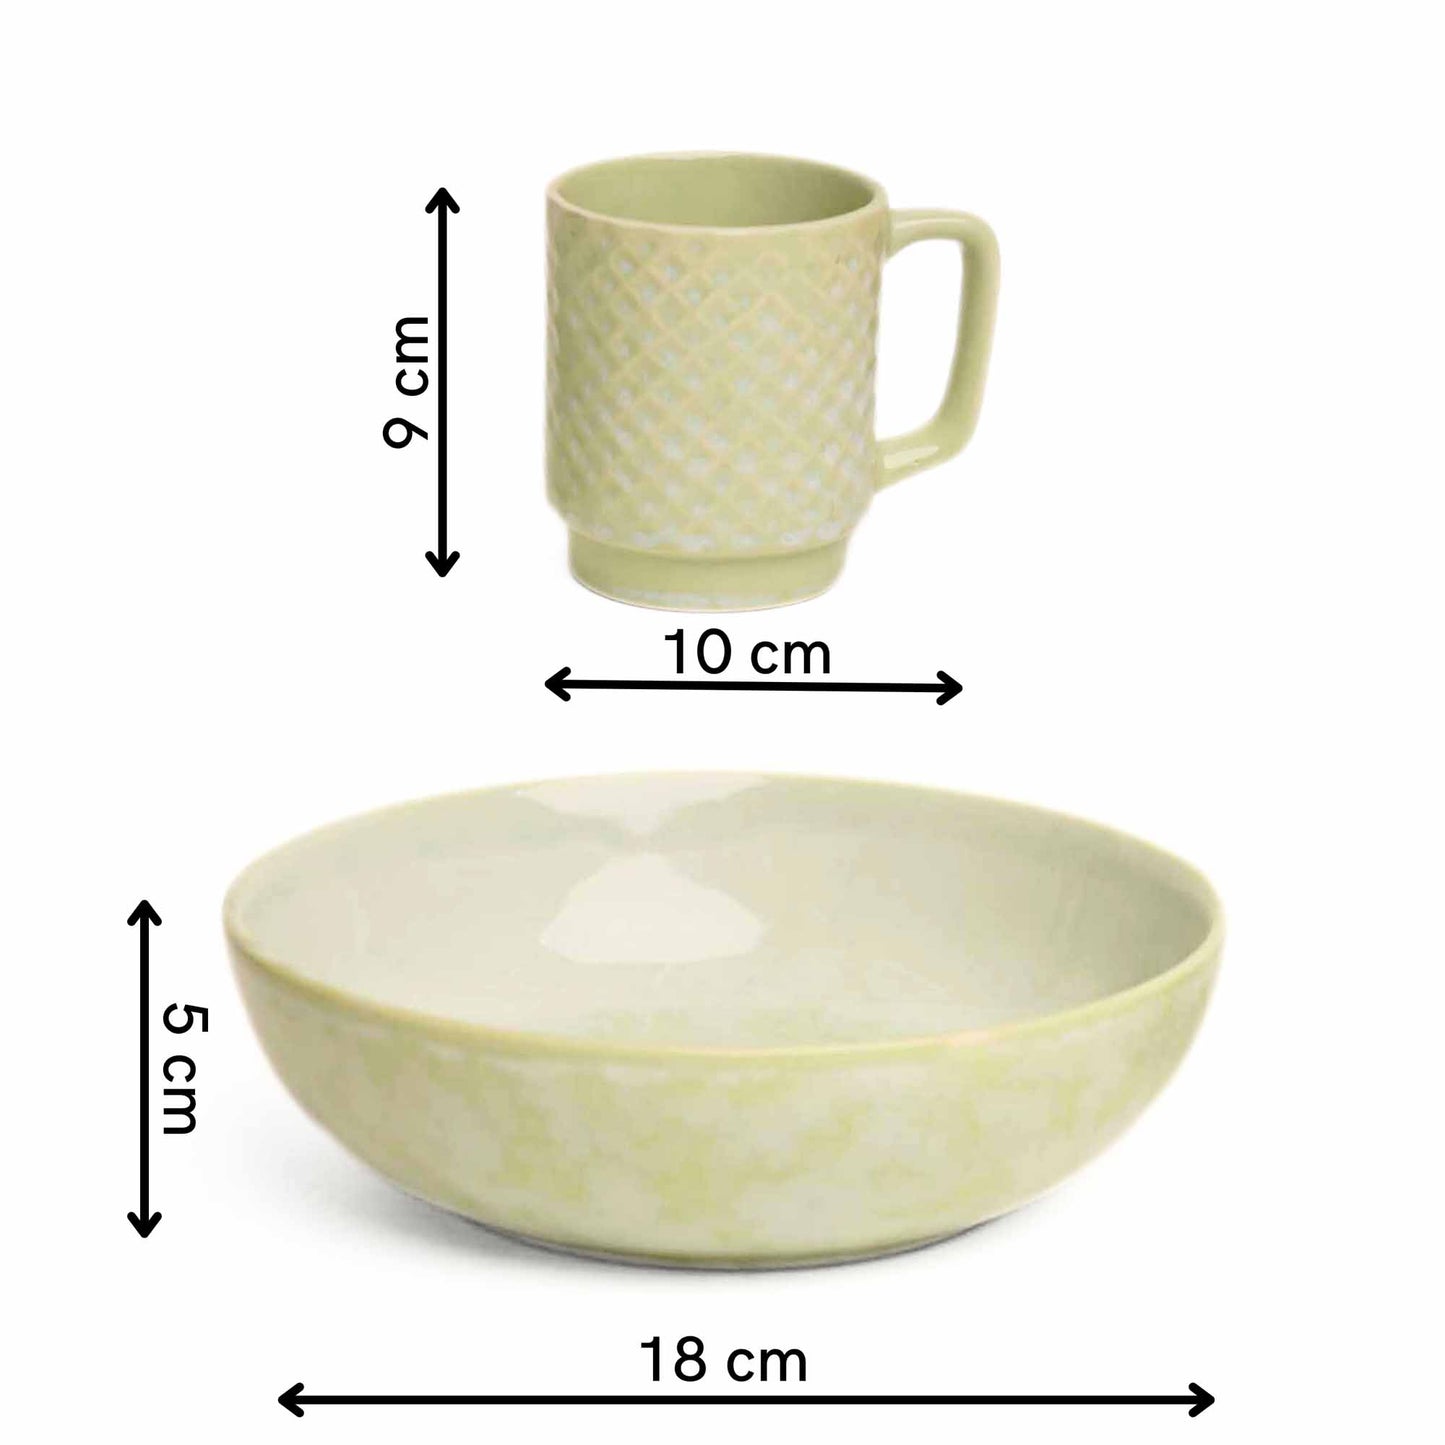 Morning Glory Breakfast Set - A Bowl & A Mug